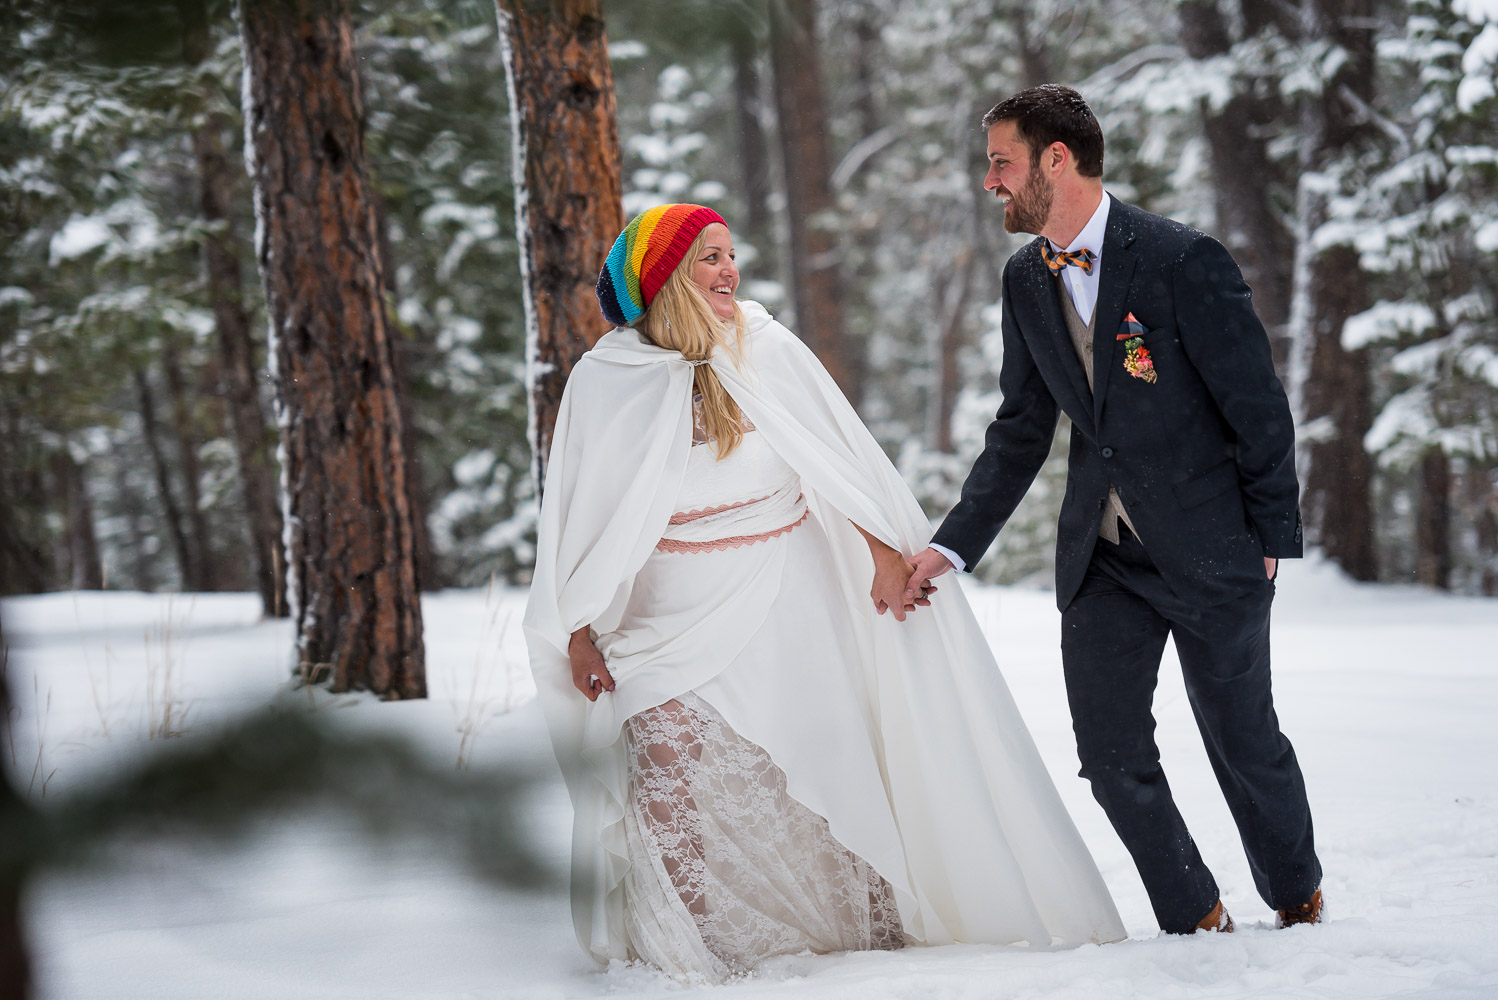 Sunshine mountain lodge winter wedding snowy couple portraits